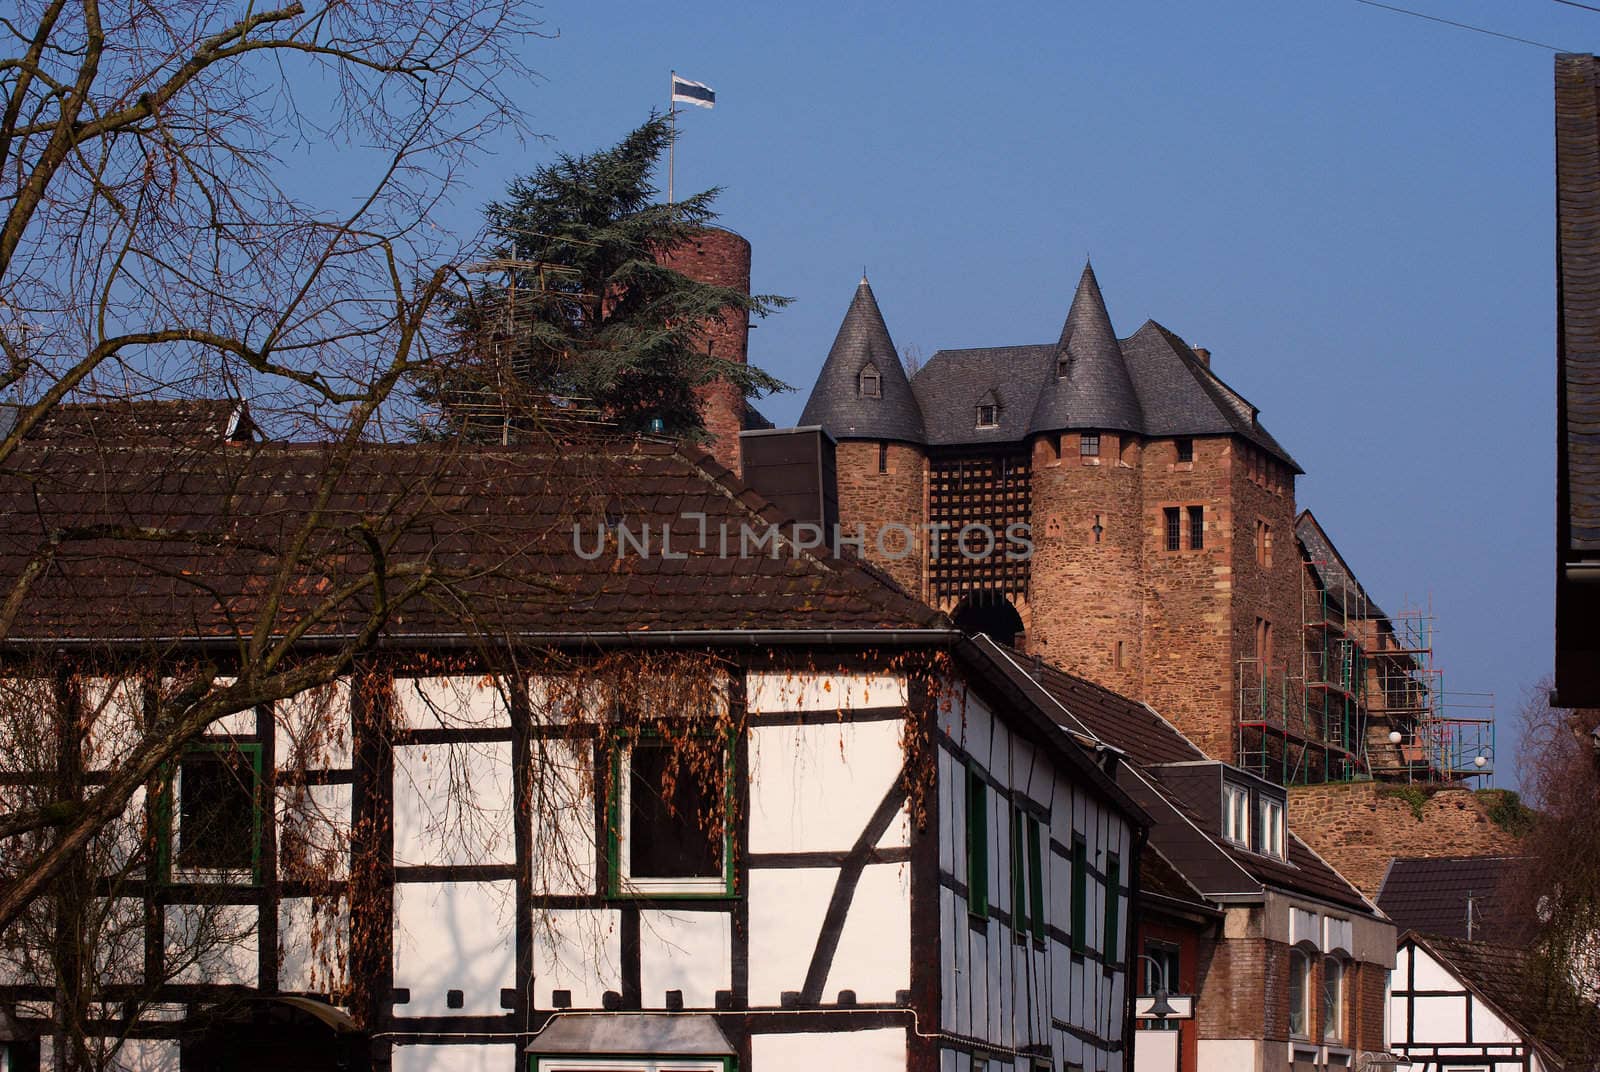 Castle in old German town by saasemen